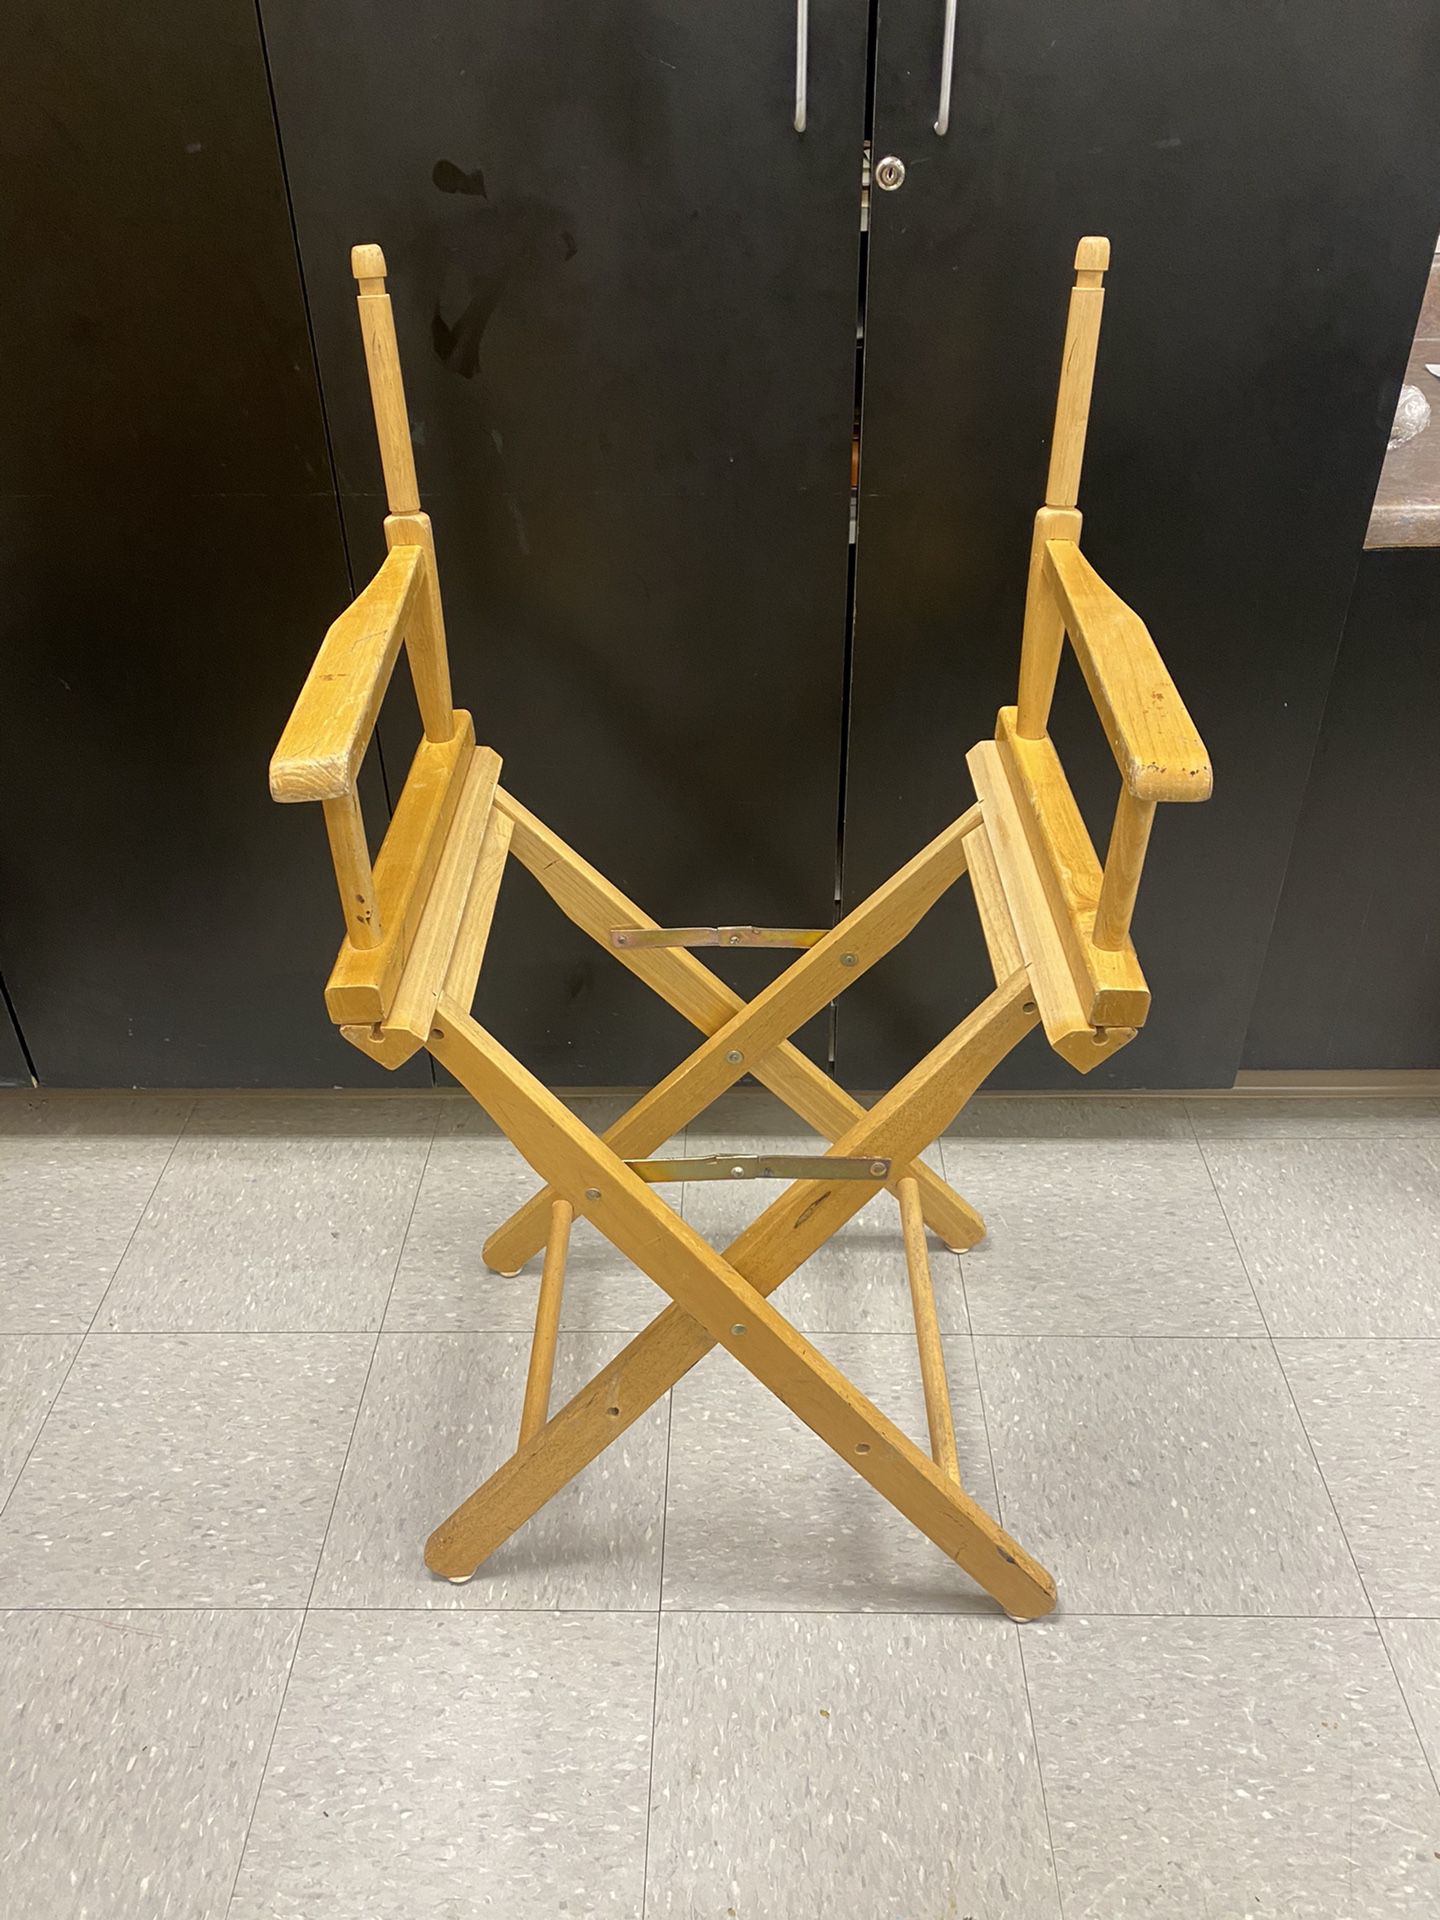 Director’s Chair Frame, 2 Available - $10 Each